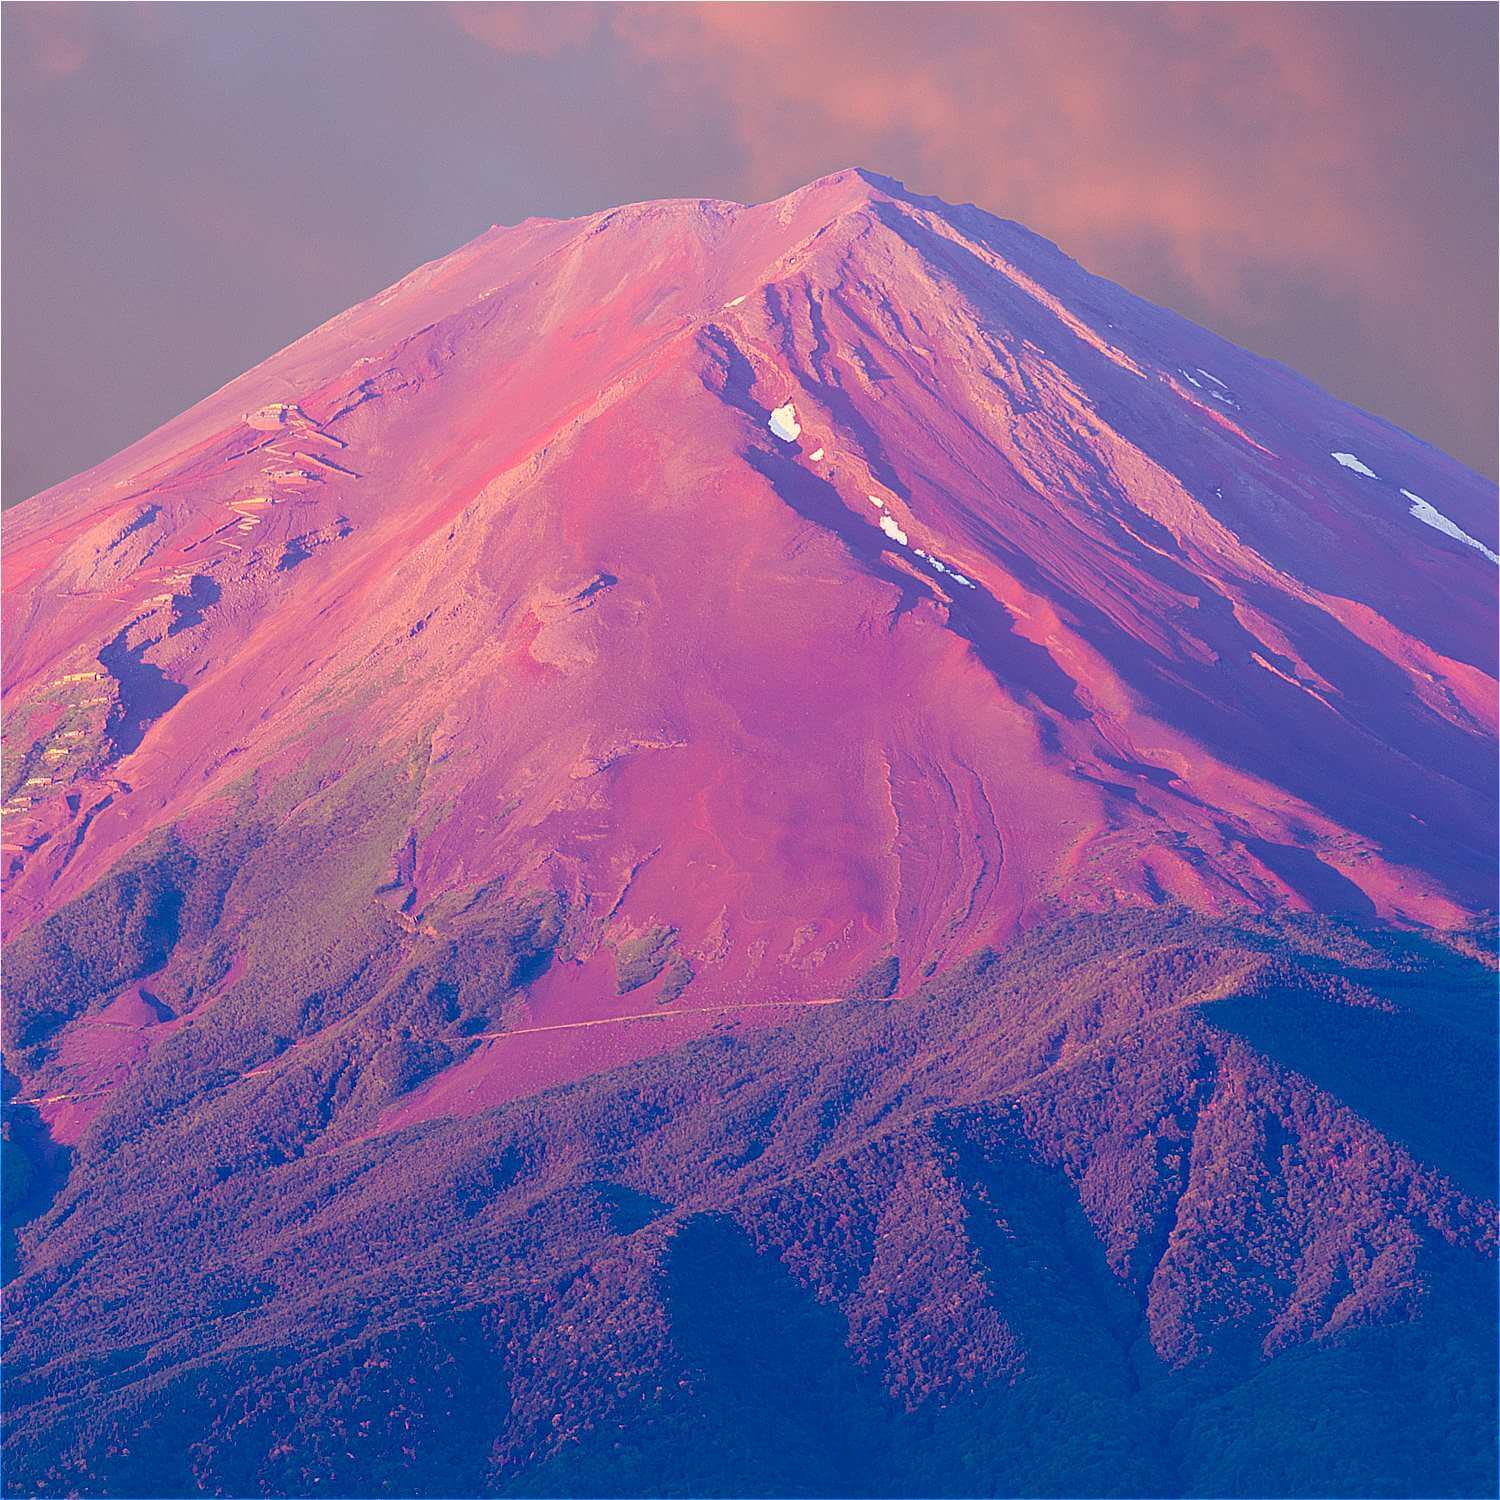 Climbing Mt. Fuji in summer = Shutterstock 12